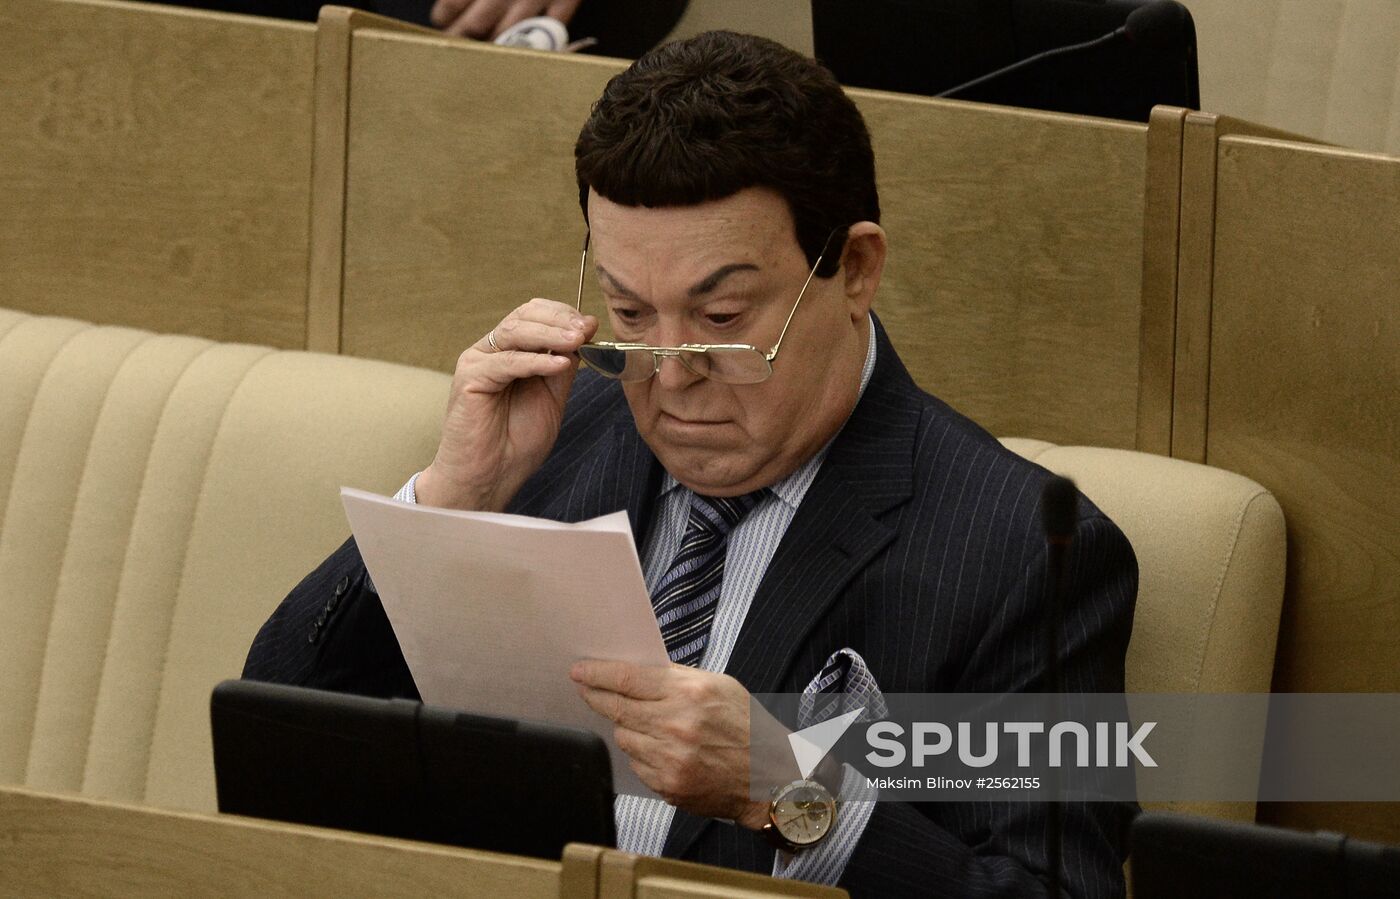 State Duma plenary session